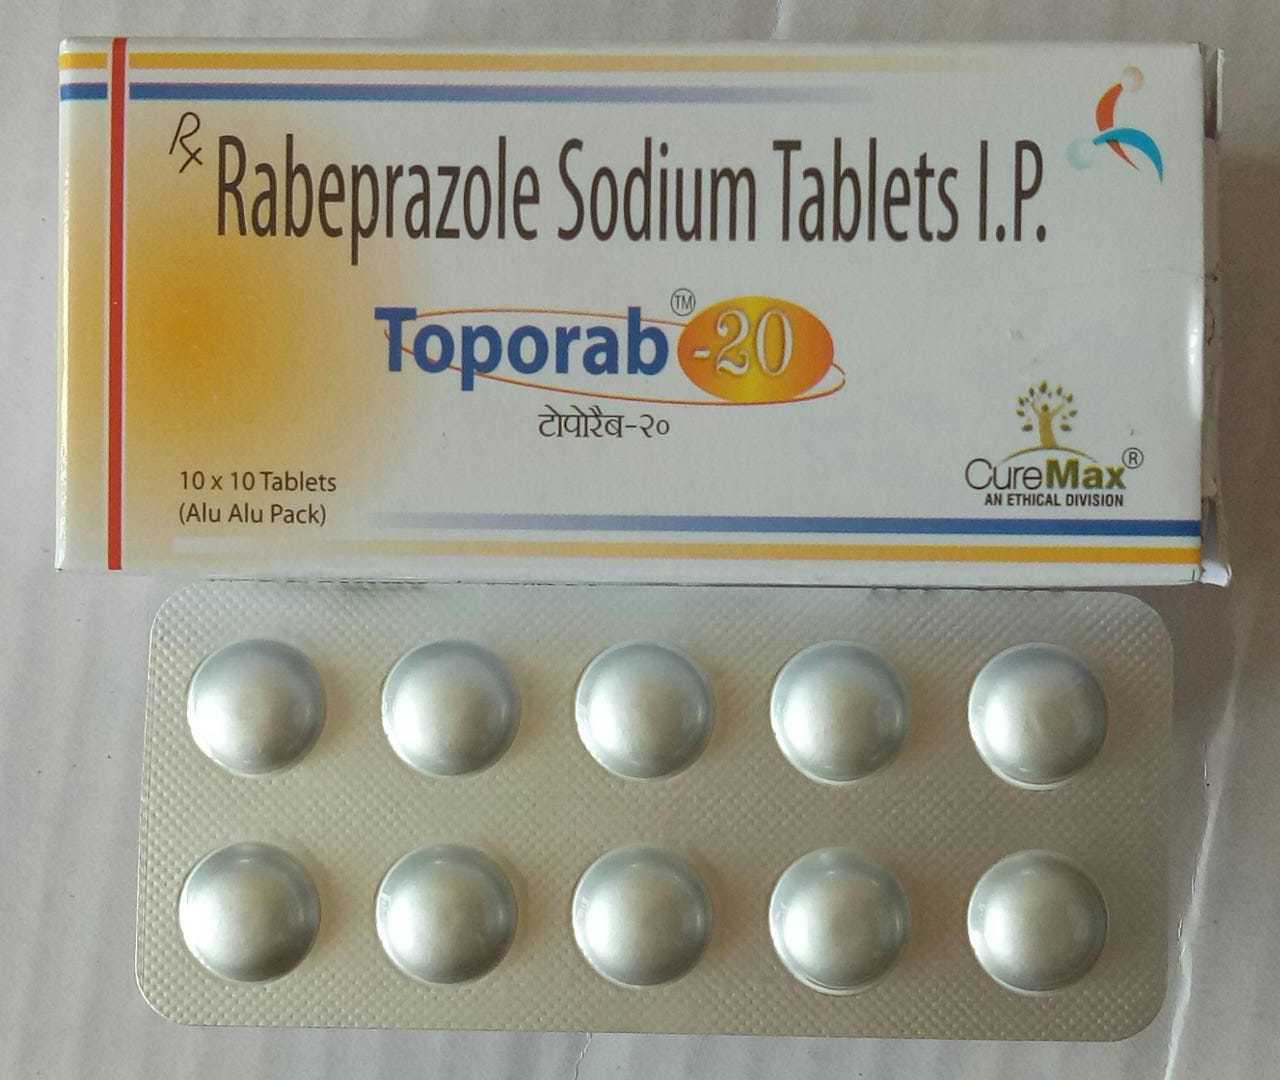 Rabeprazole 20 mg